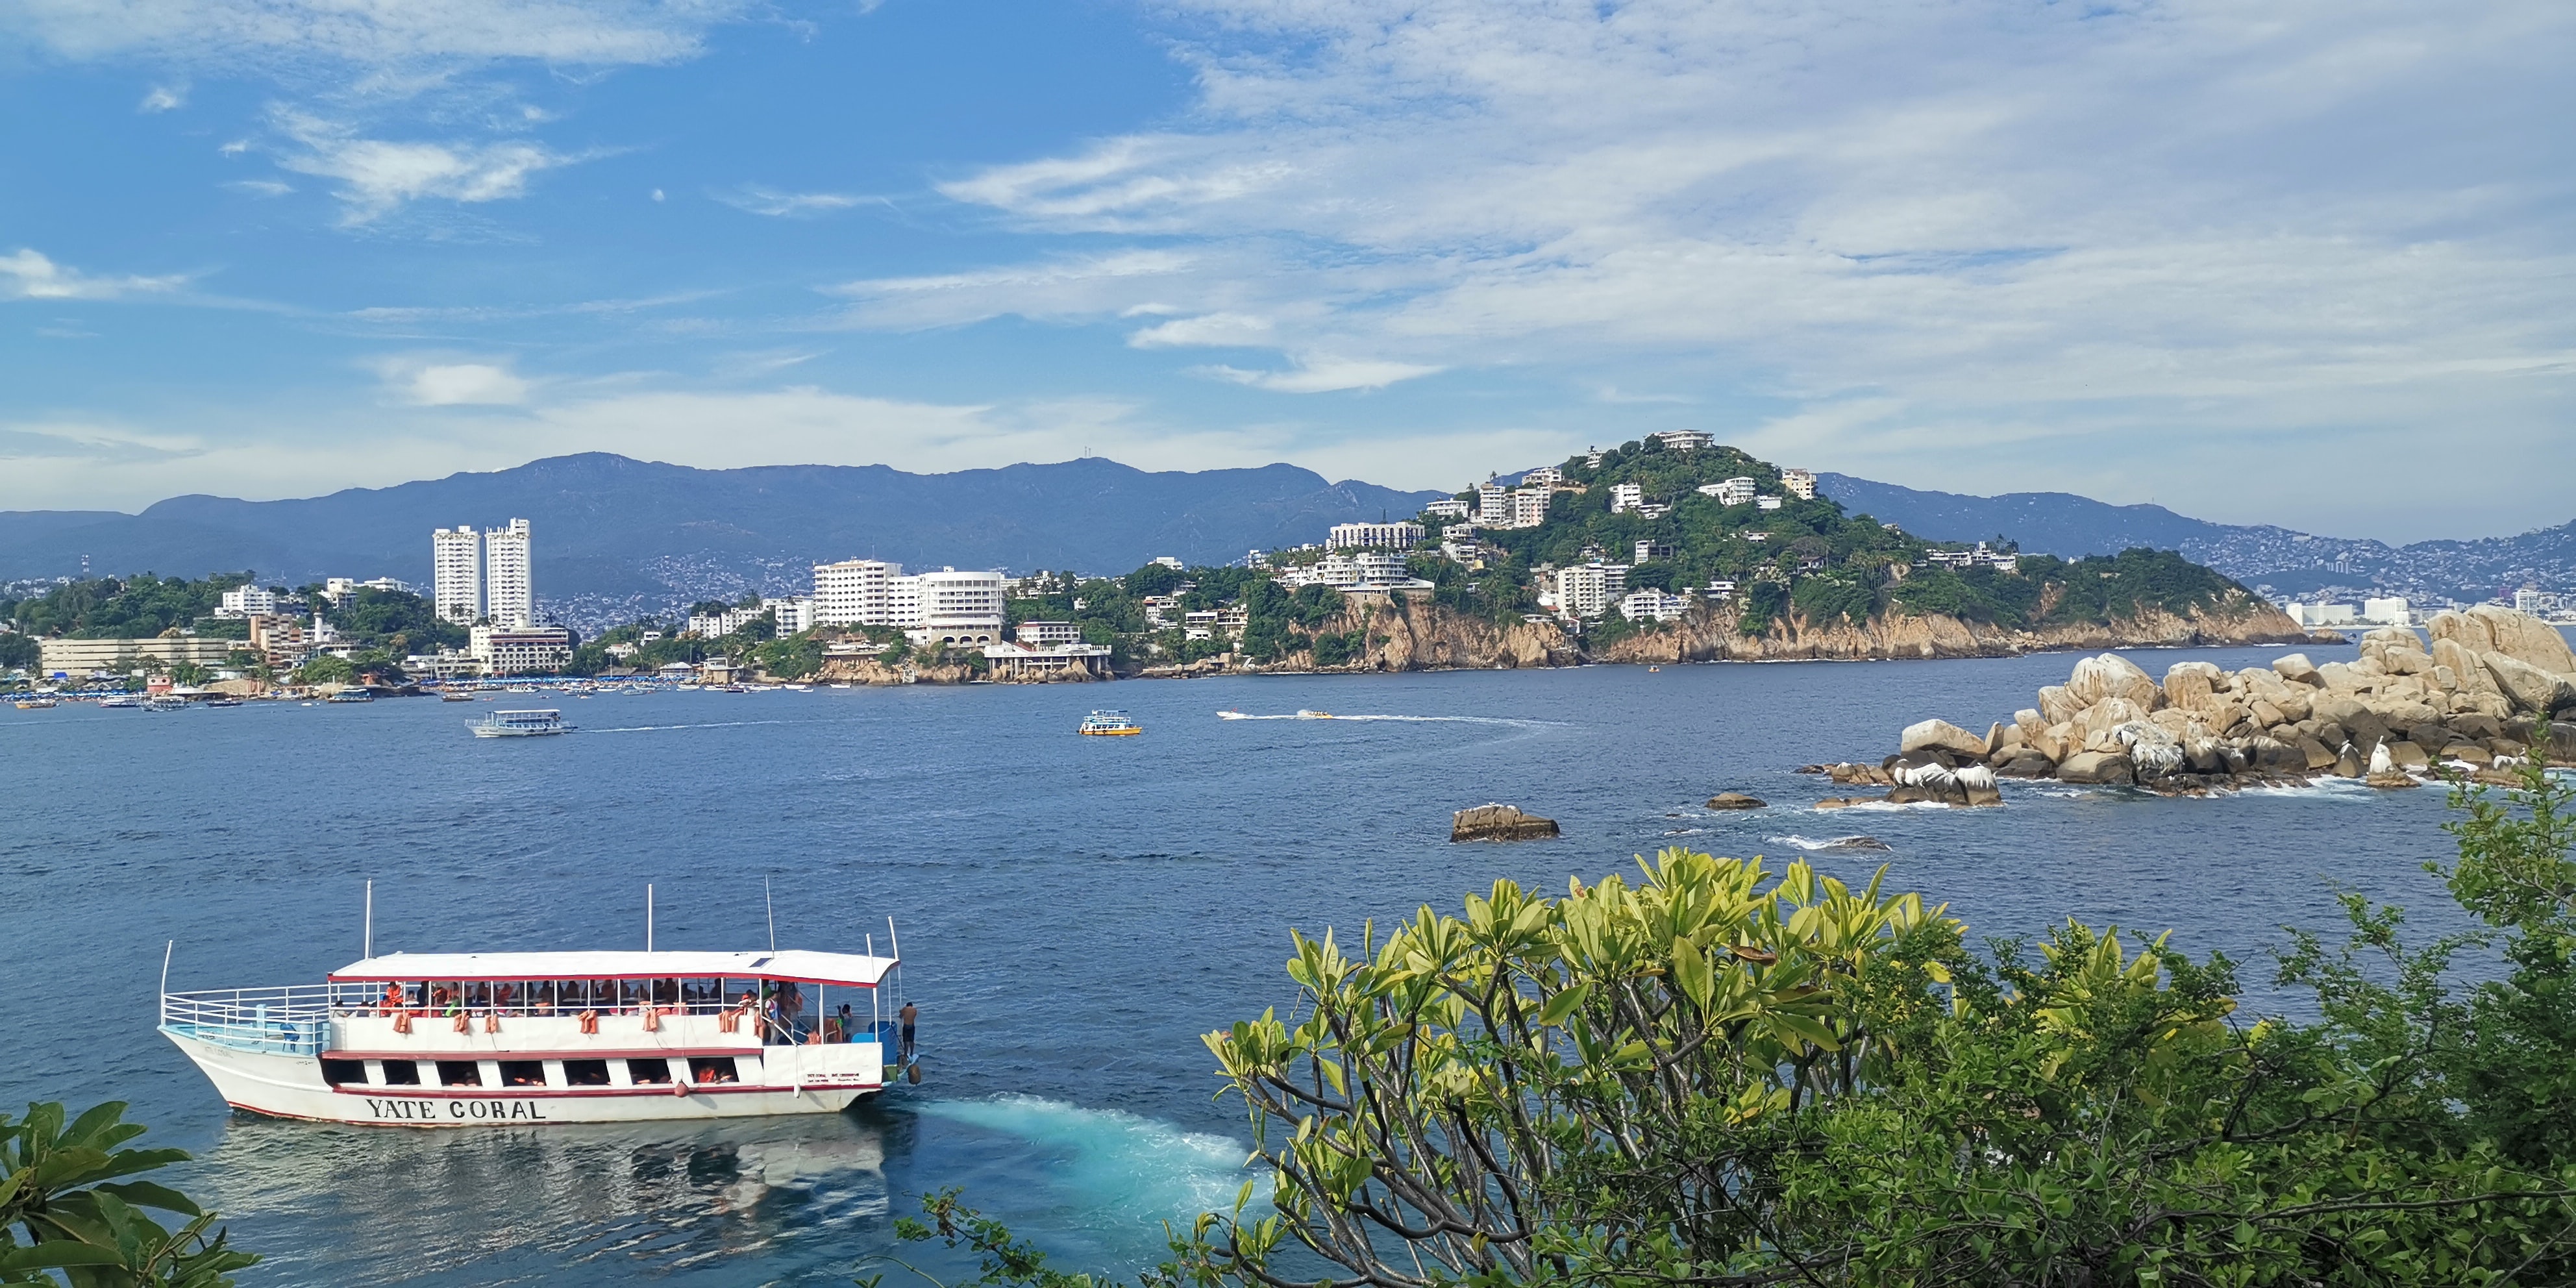 Day 04: Taxco – Acapulco